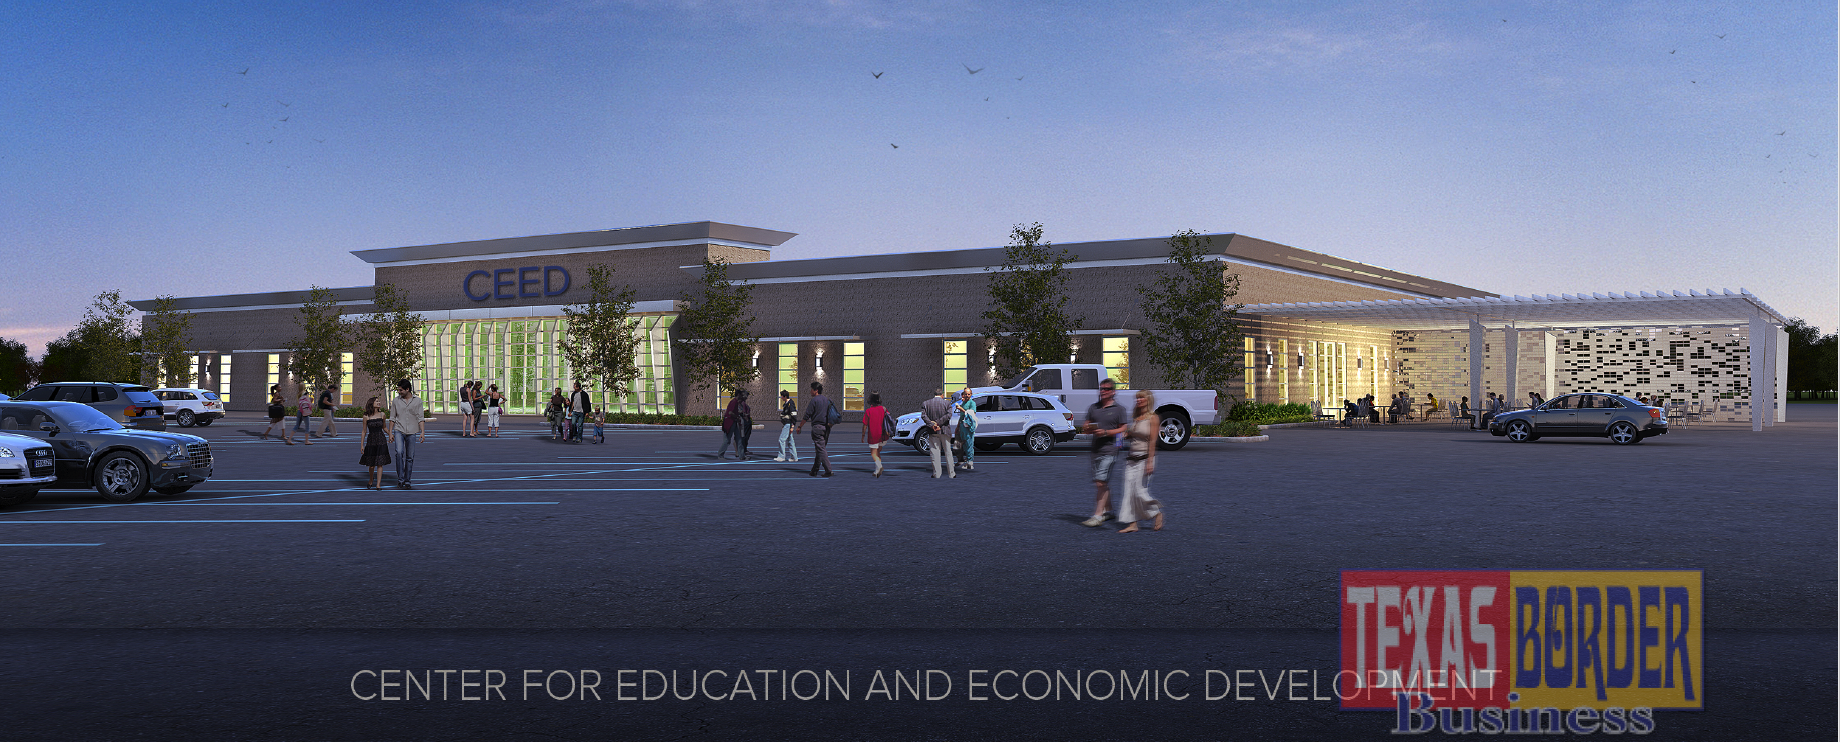 Center for Education and Economic Development RENDERING.